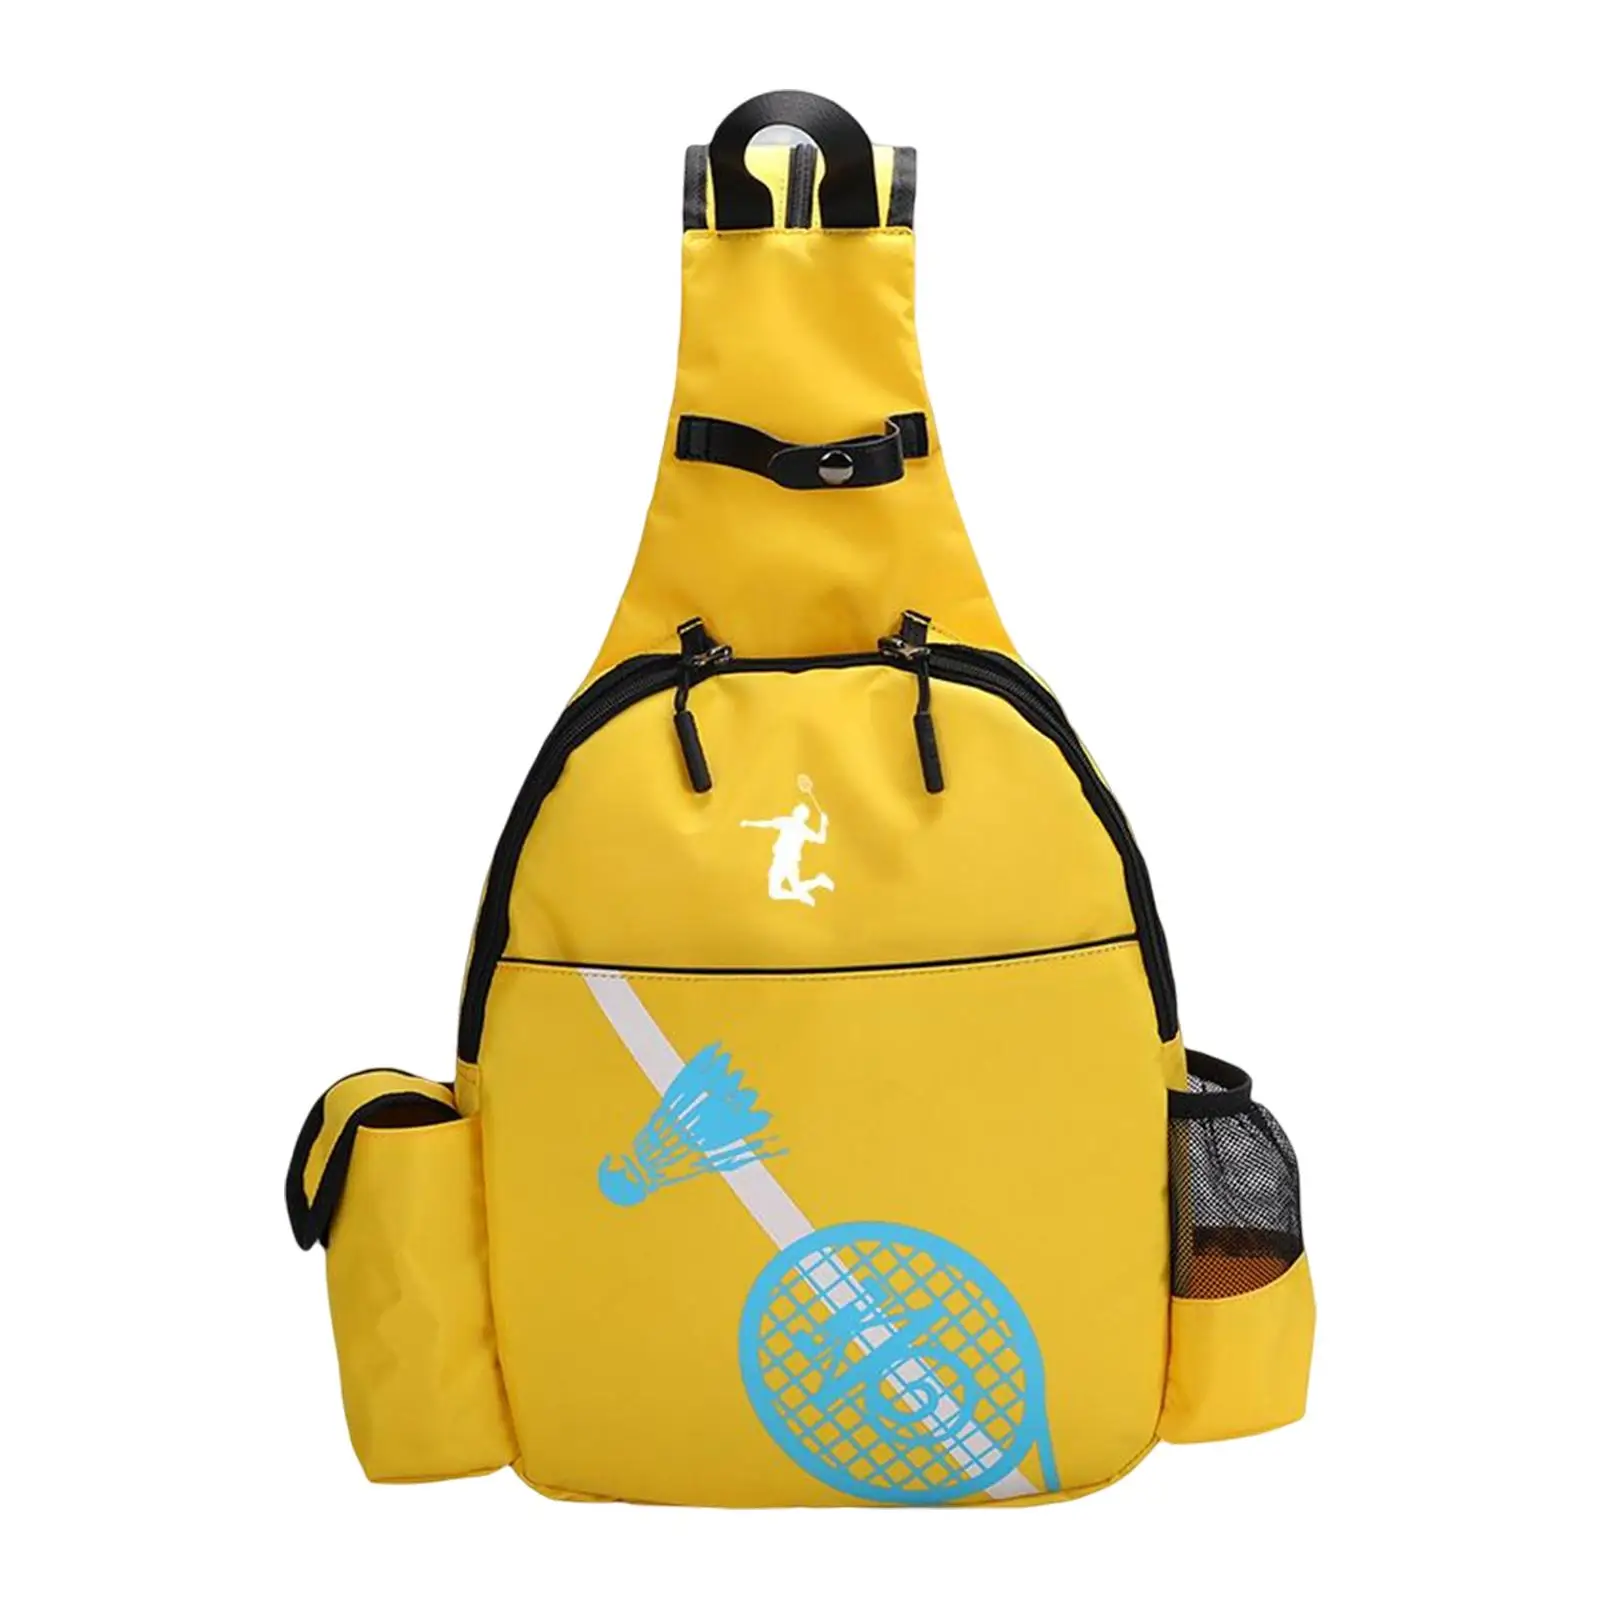 Tennis Racket Backpack Large Capacity with Adjustable Shoulder Strap Lightweight Tennis Racquet Bag for Badminton Racquet Unisex